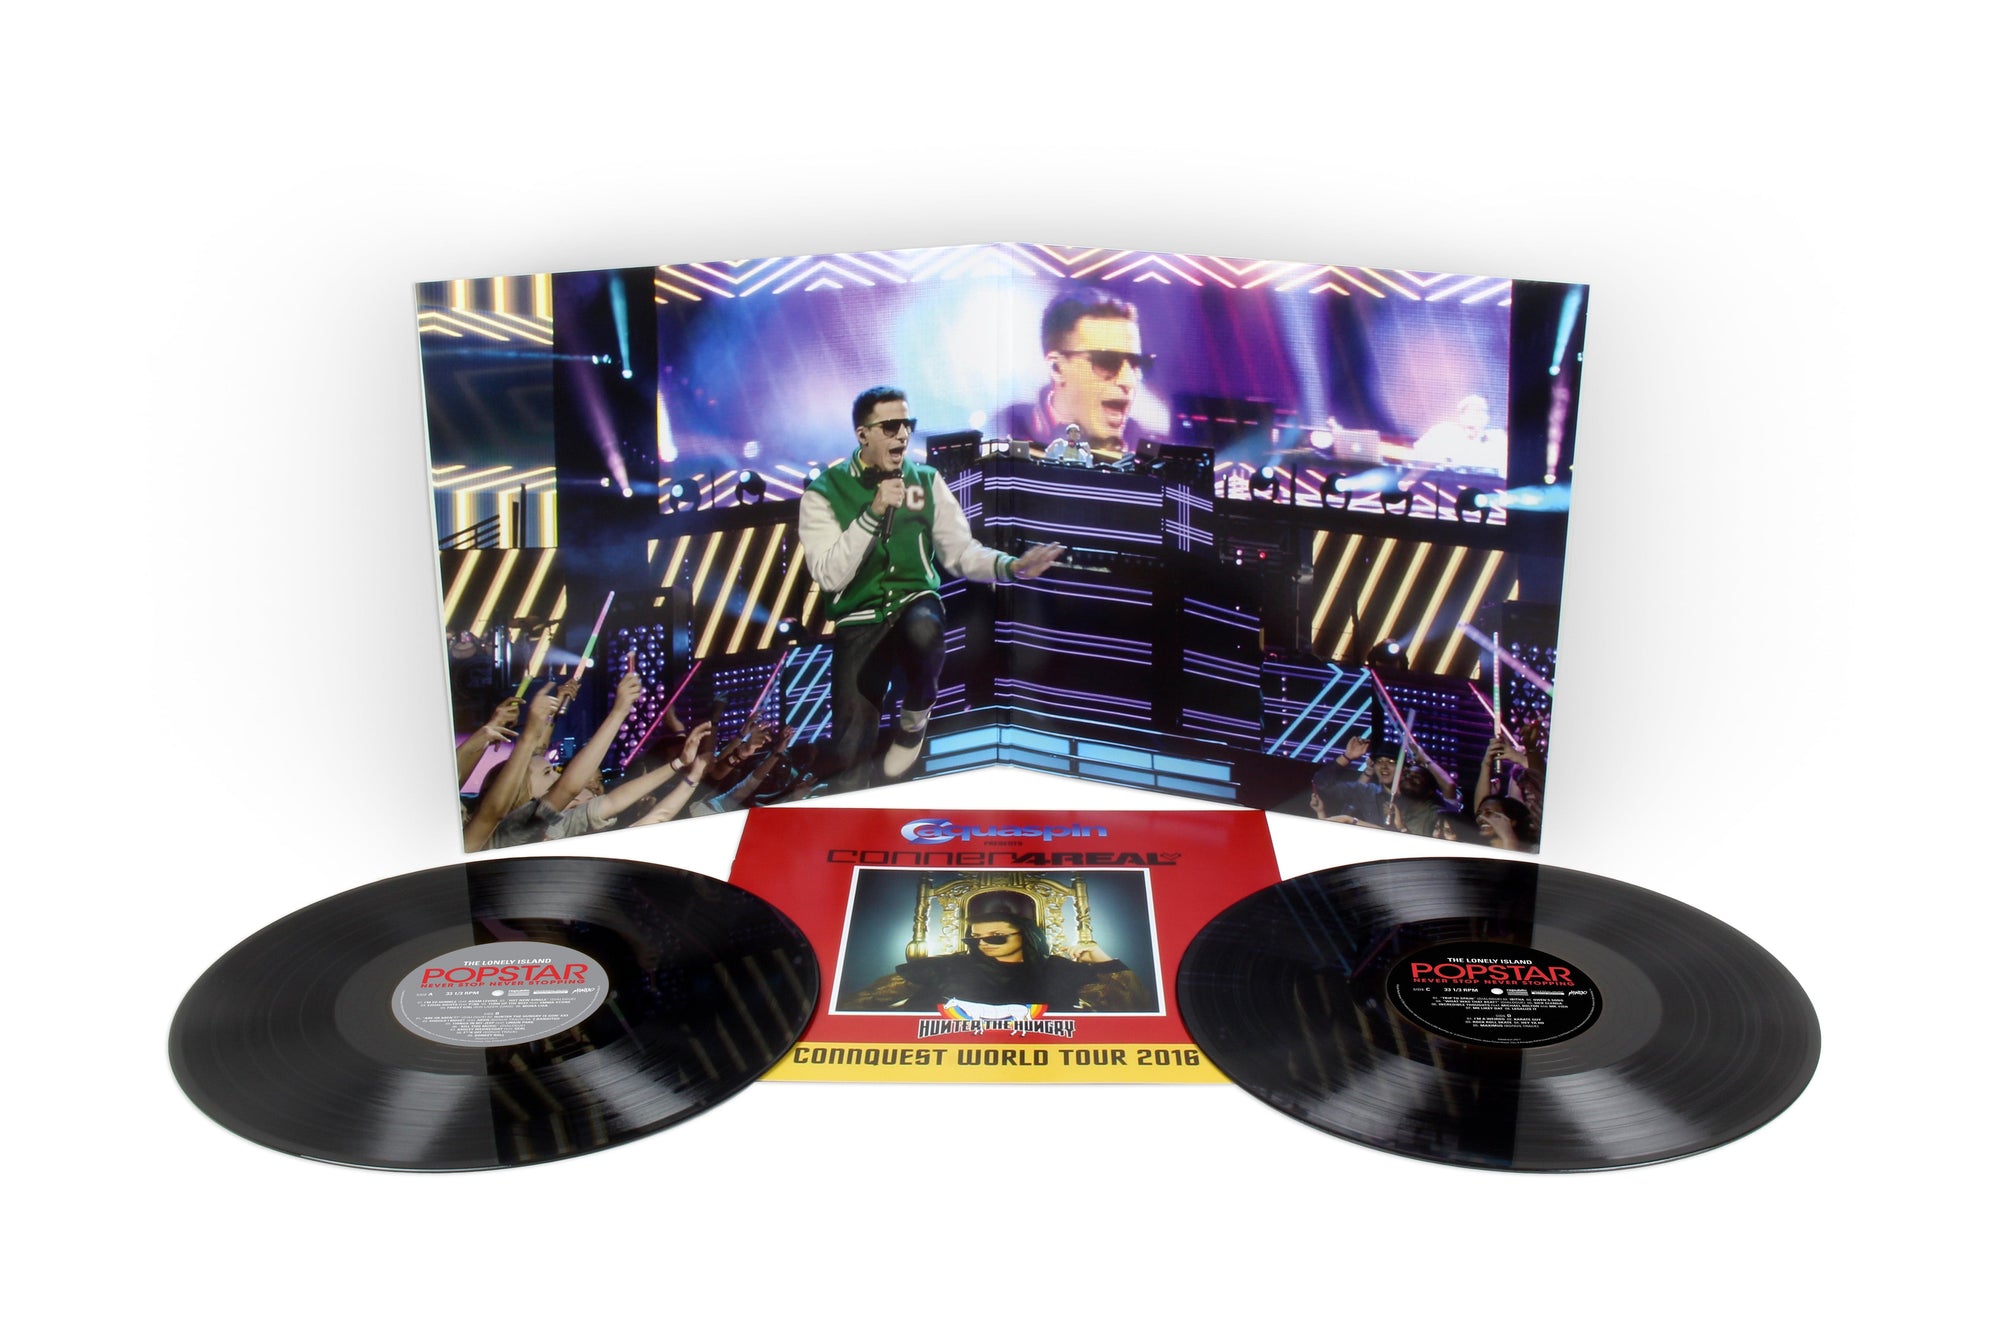 Man of Steel [Original Score] [Limited Edition] LP (Vinyl, Jul-2013,  WaterTower Music) for sale online